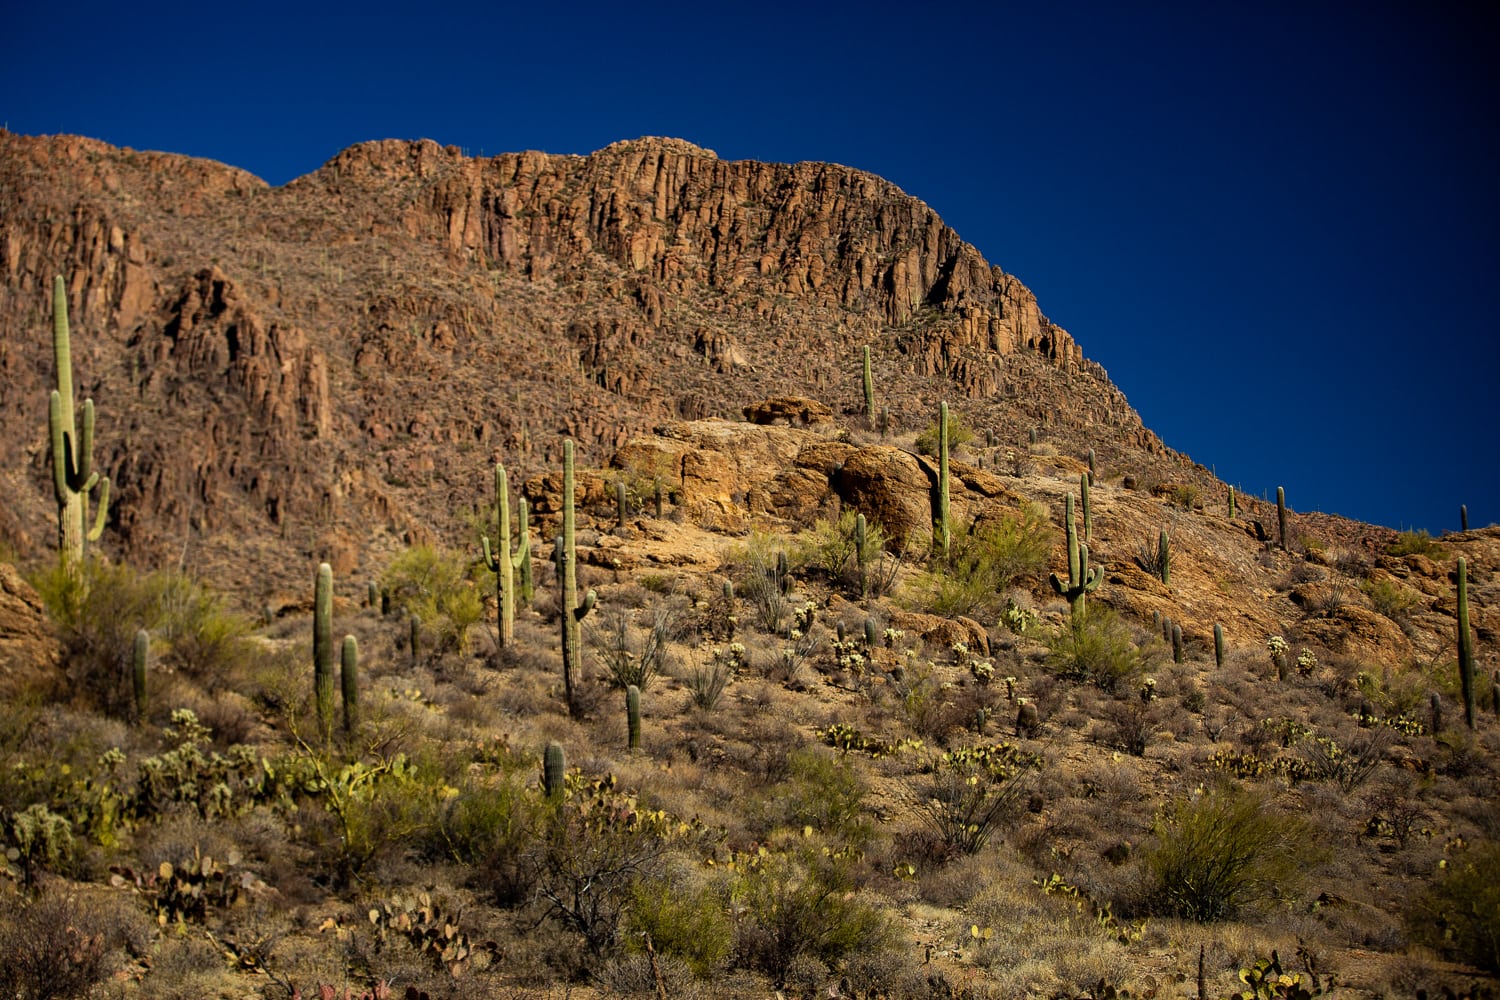 A landscape photo of Saguaro cactuses in Tucson Mountain Park against a blue sky. 